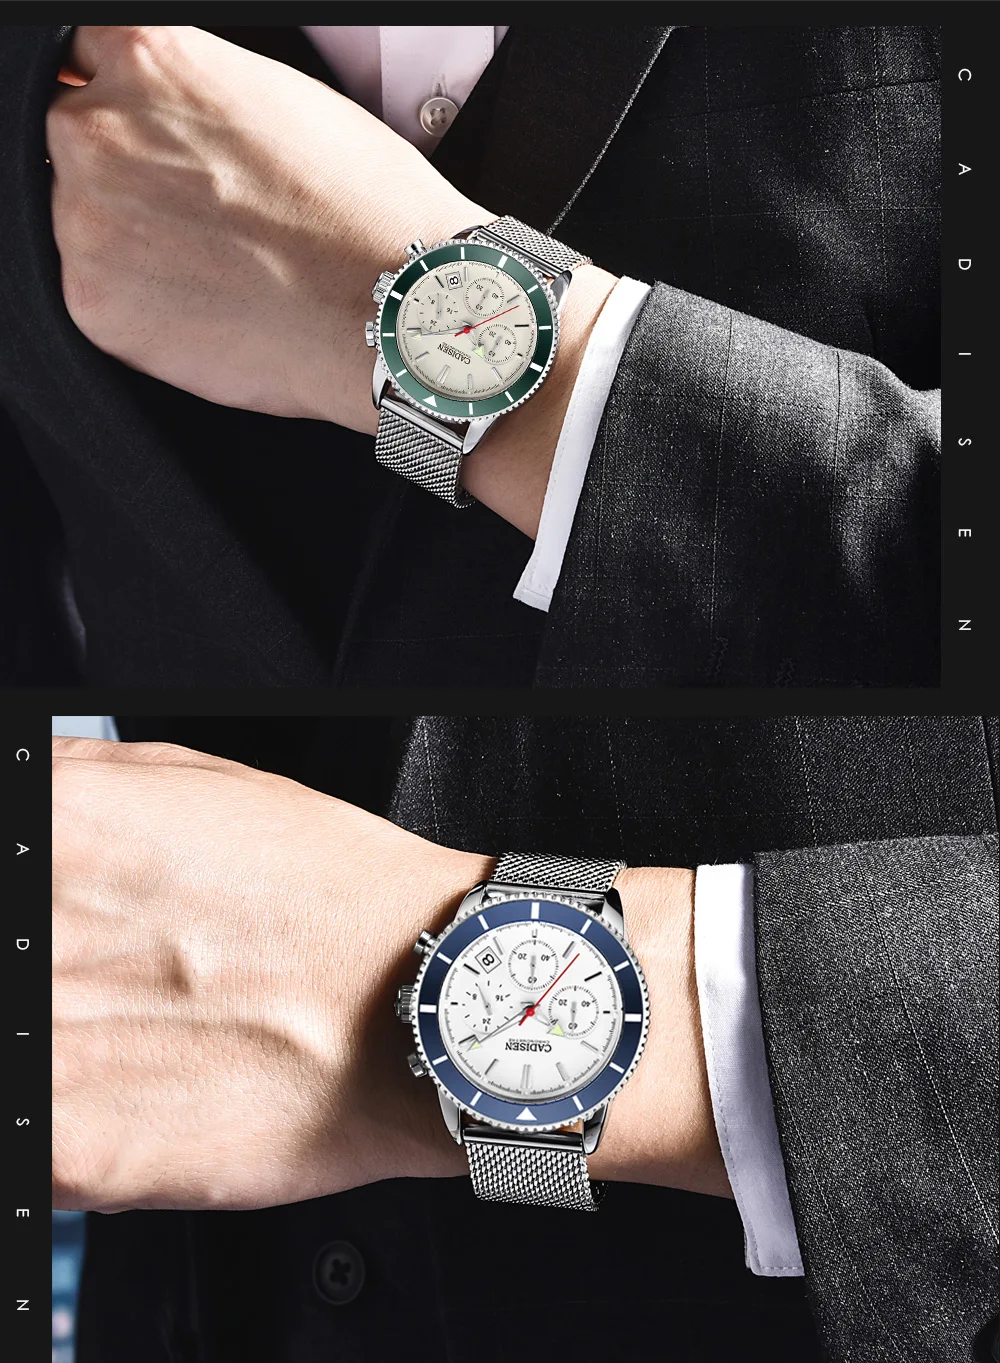 CADISEN New Men's Watches Fashion Quartz Mens watches top Brand Luxury Sports Military Watch Men clock relogio masculino